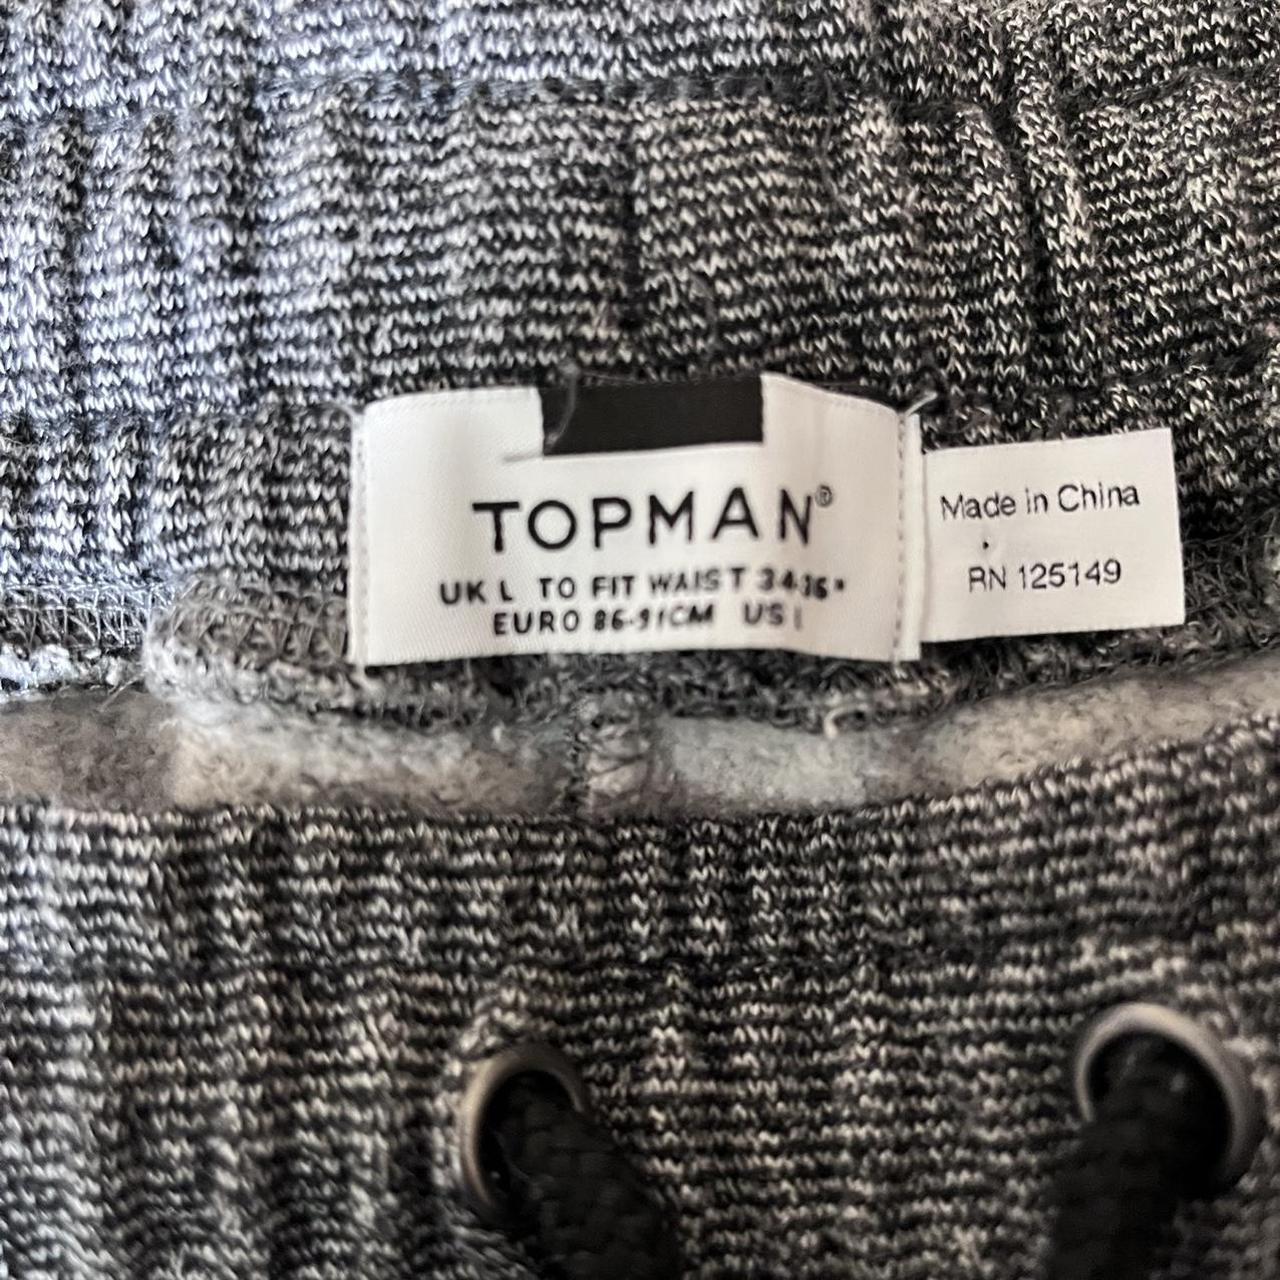 Product Image 4 - Marled Gray Sweatpants Sz L
Topman
Drawstring